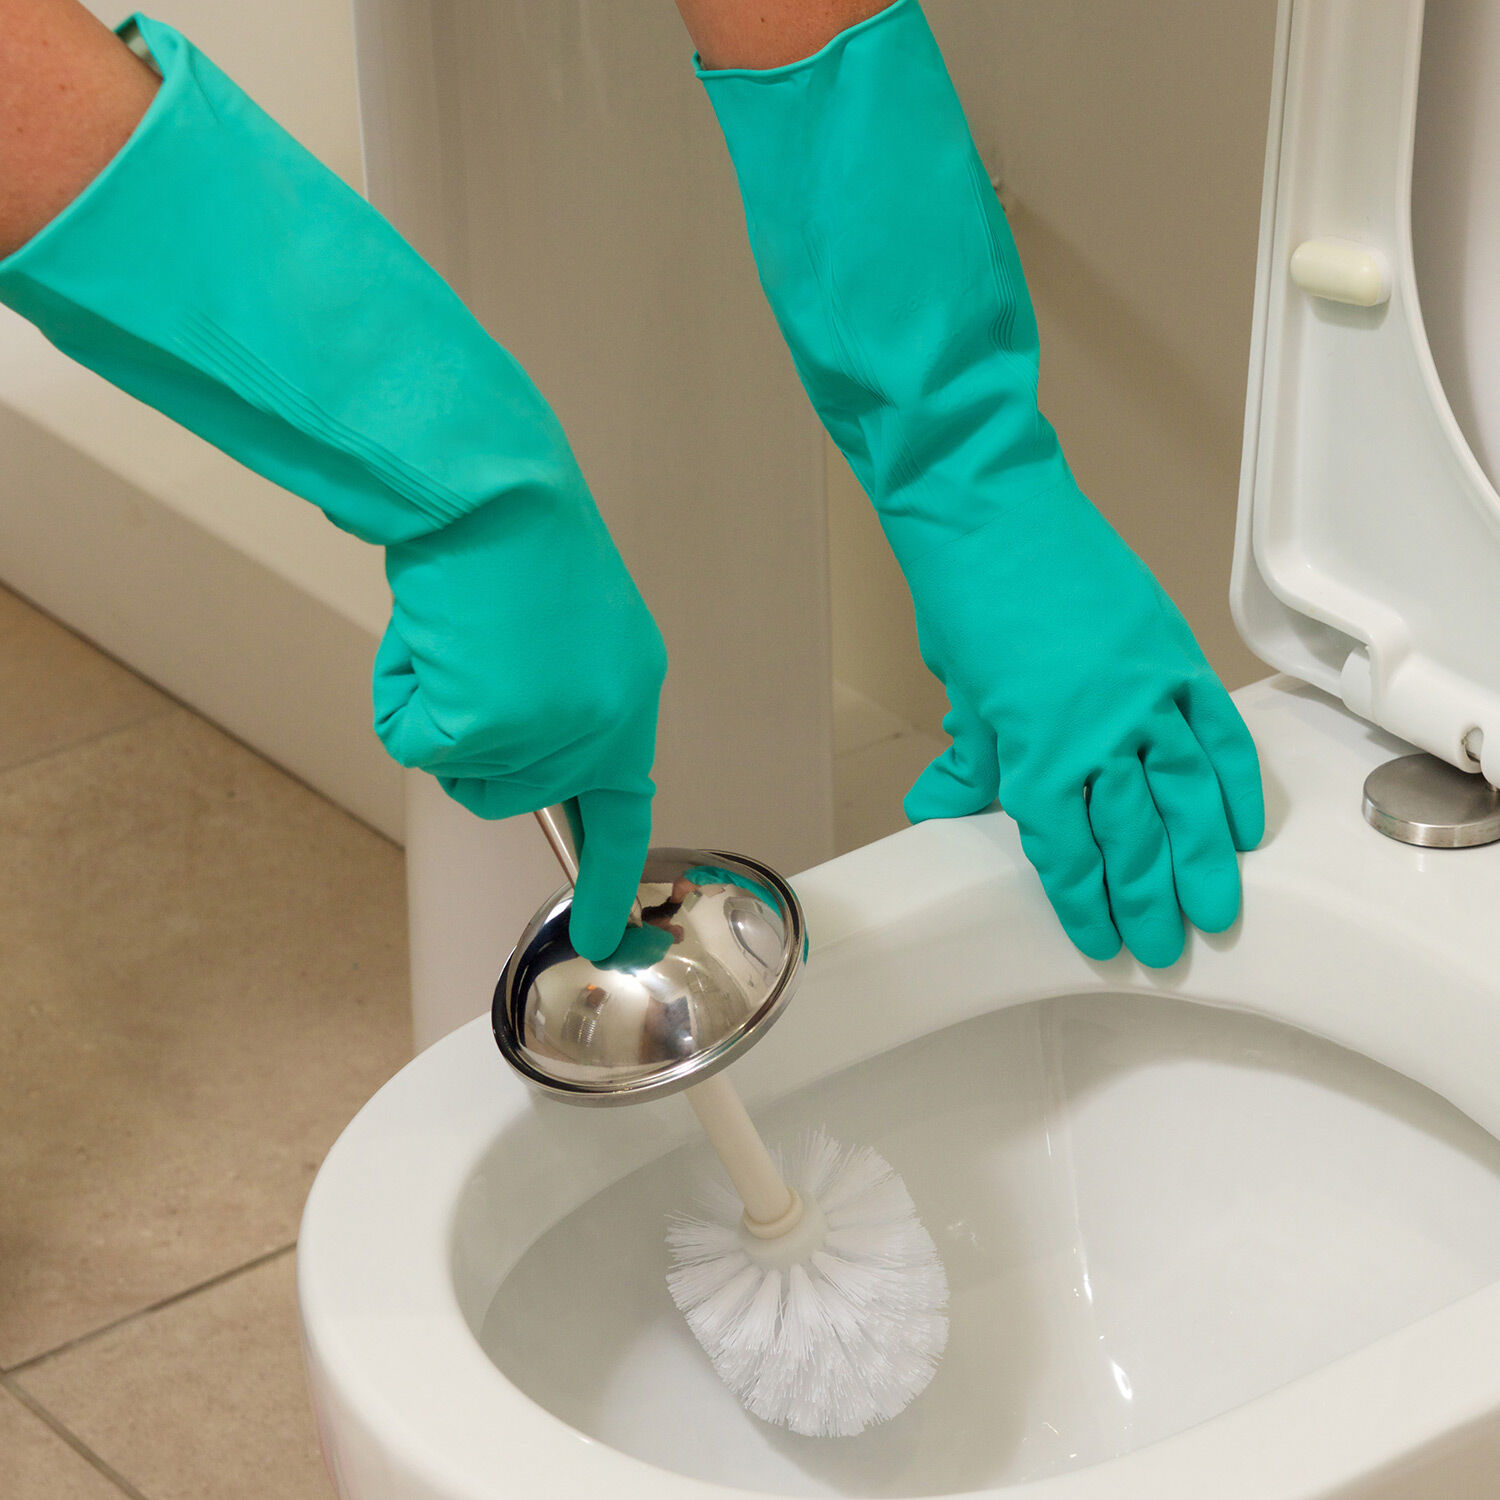 Очистить унитаз в домашних условиях эффективно. Для мытья сантехники. Чистка туалета.